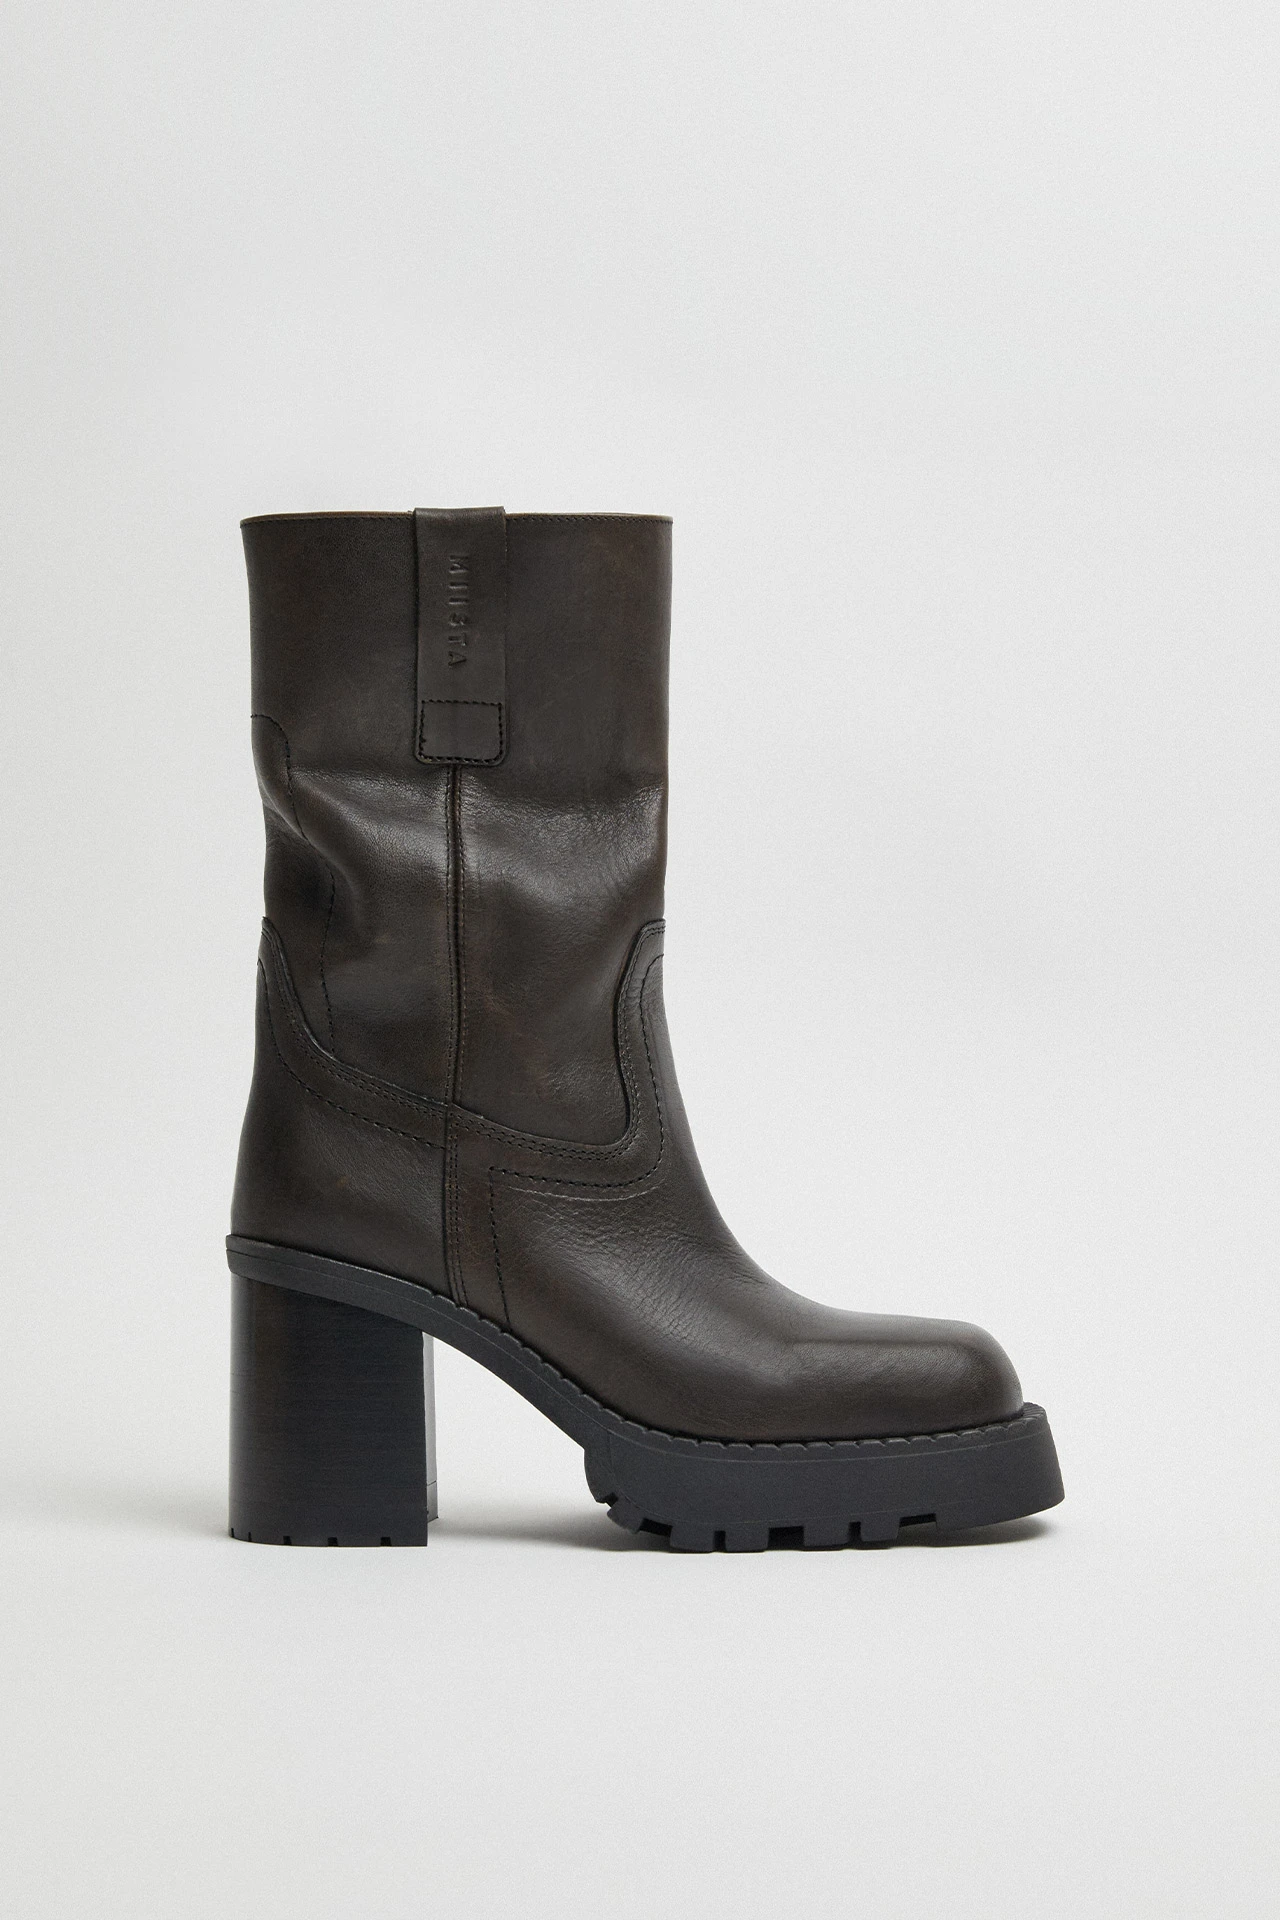 E8-daiane-brown-boots-01